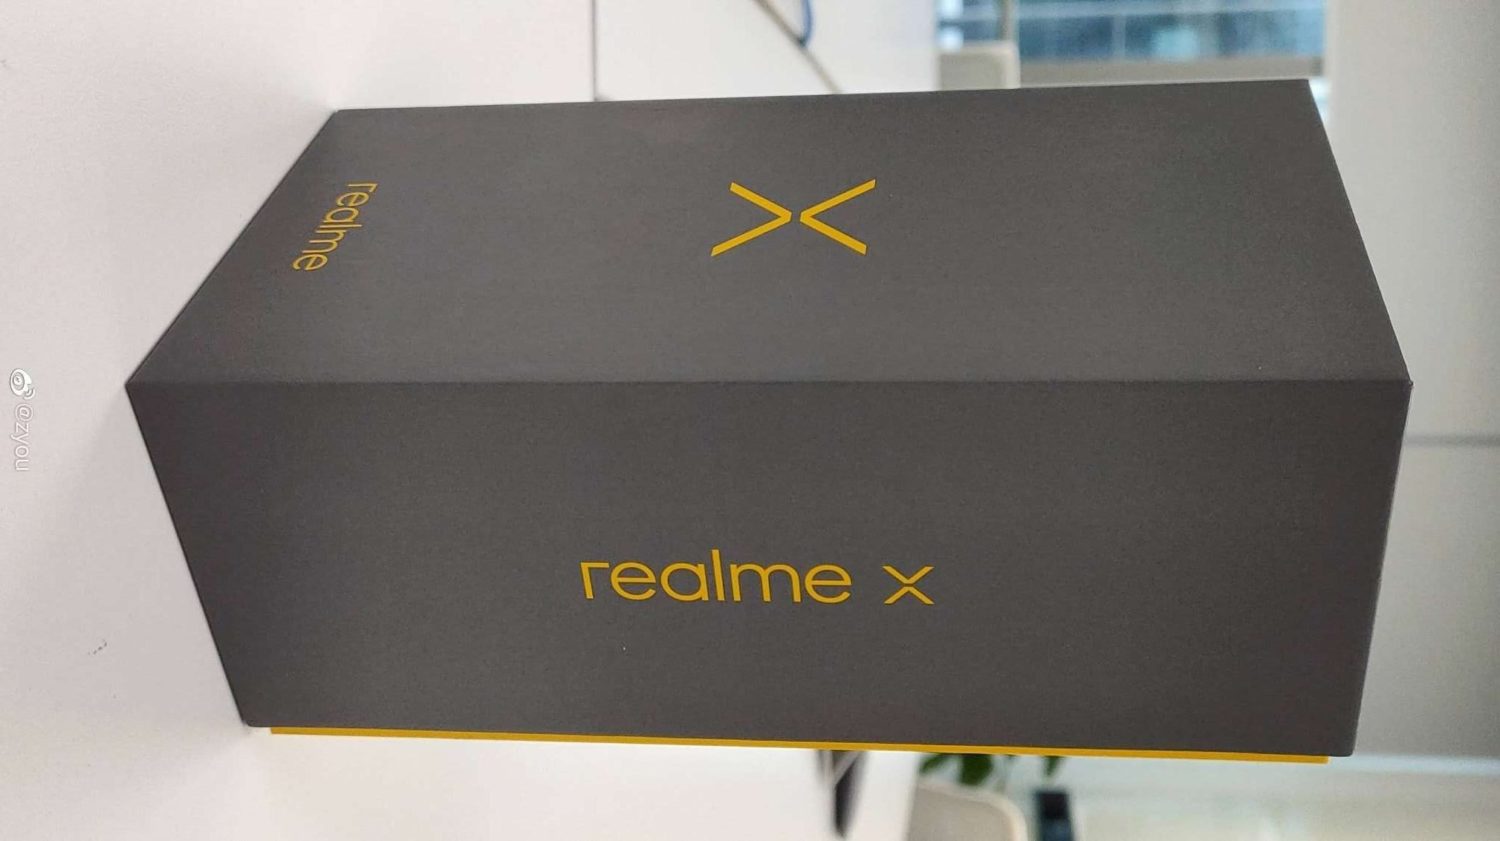 Realme-X-Box-thephonetalks